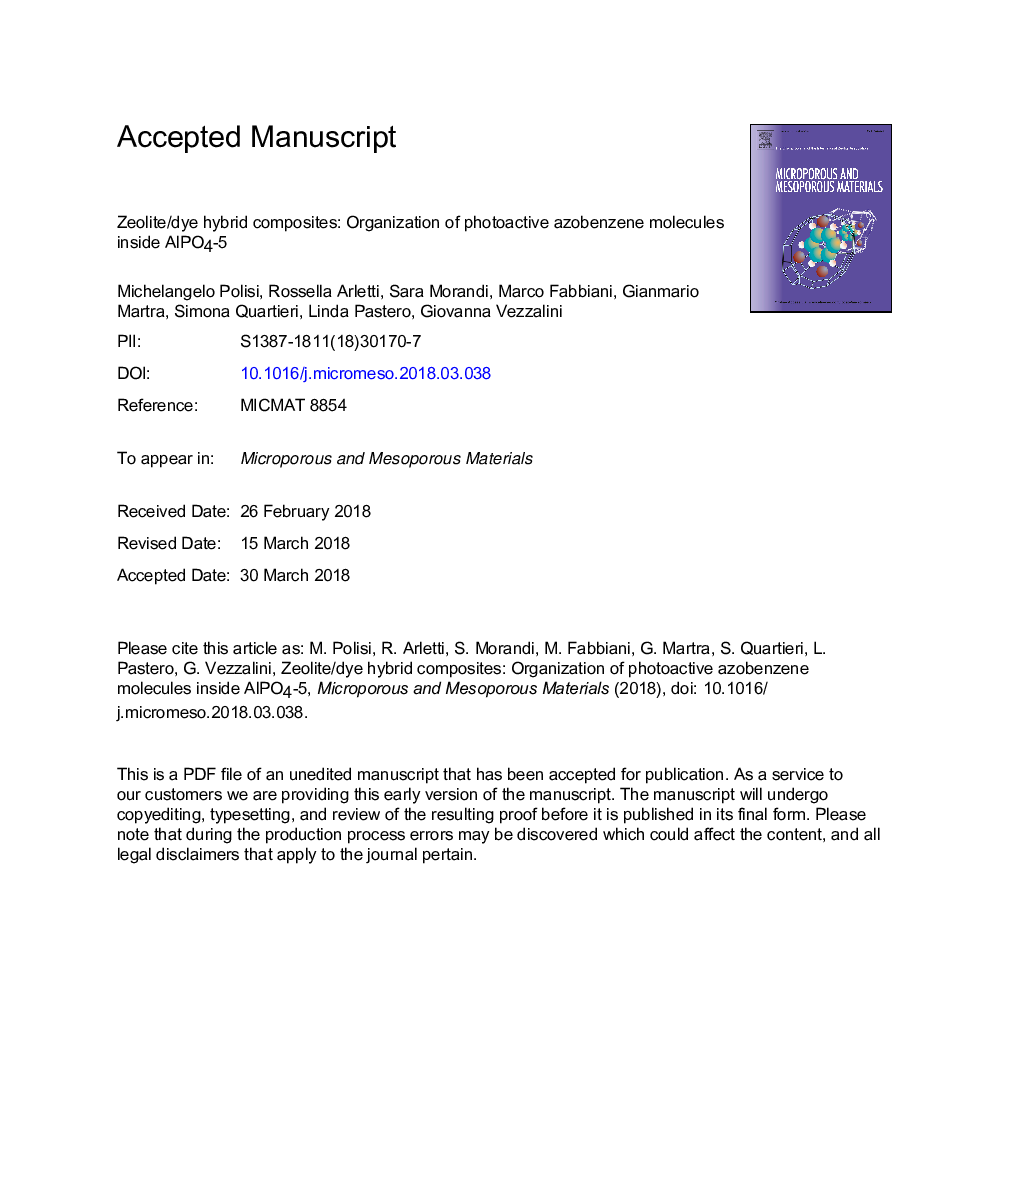 Zeolite/dye hybrid composites: Organization of photoactive azobenzene molecules inside AlPO4-5